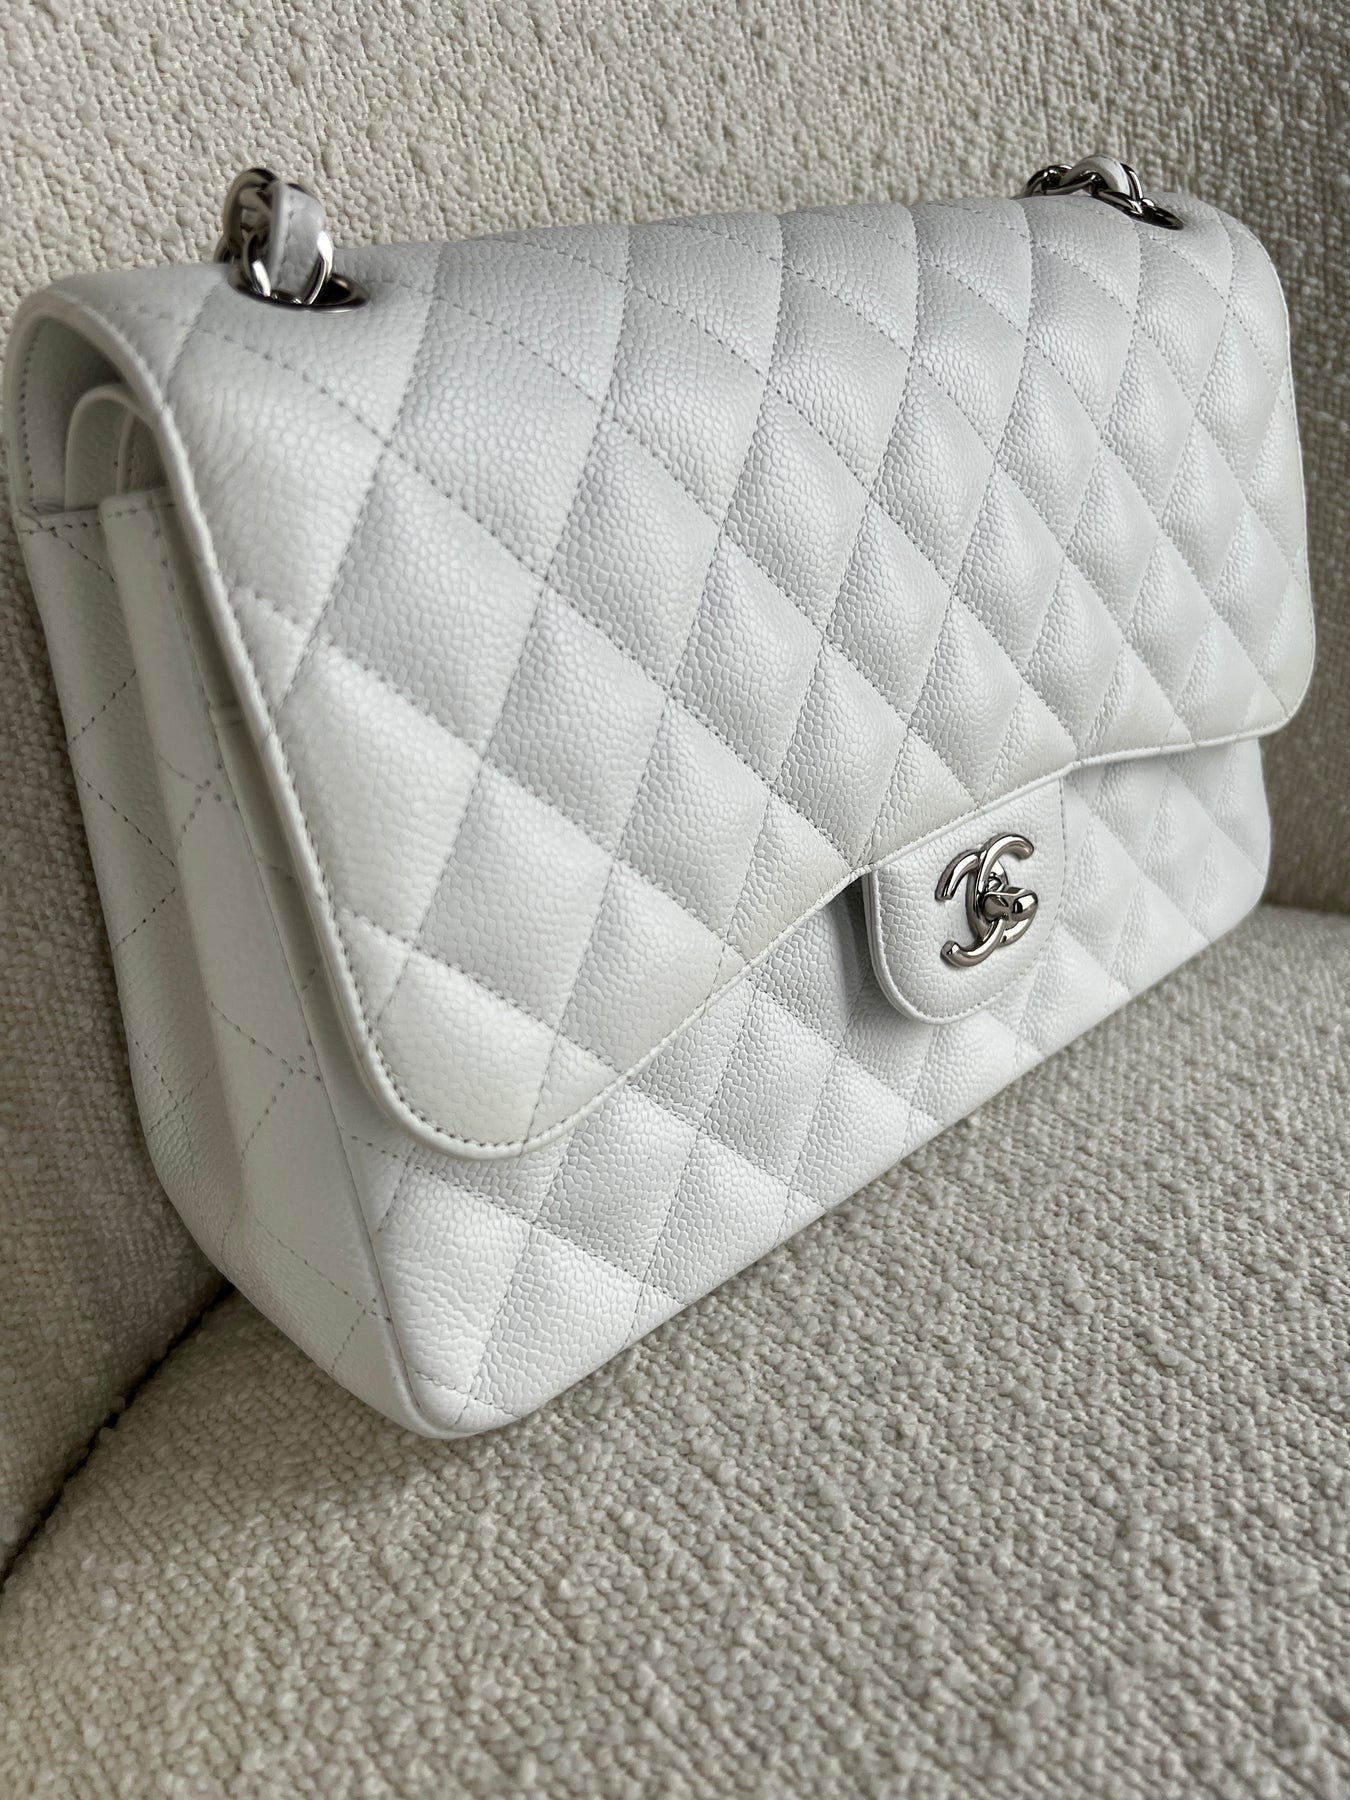 Chanel Caviar Jumbo Double Flap Bag(RRP £9,240)